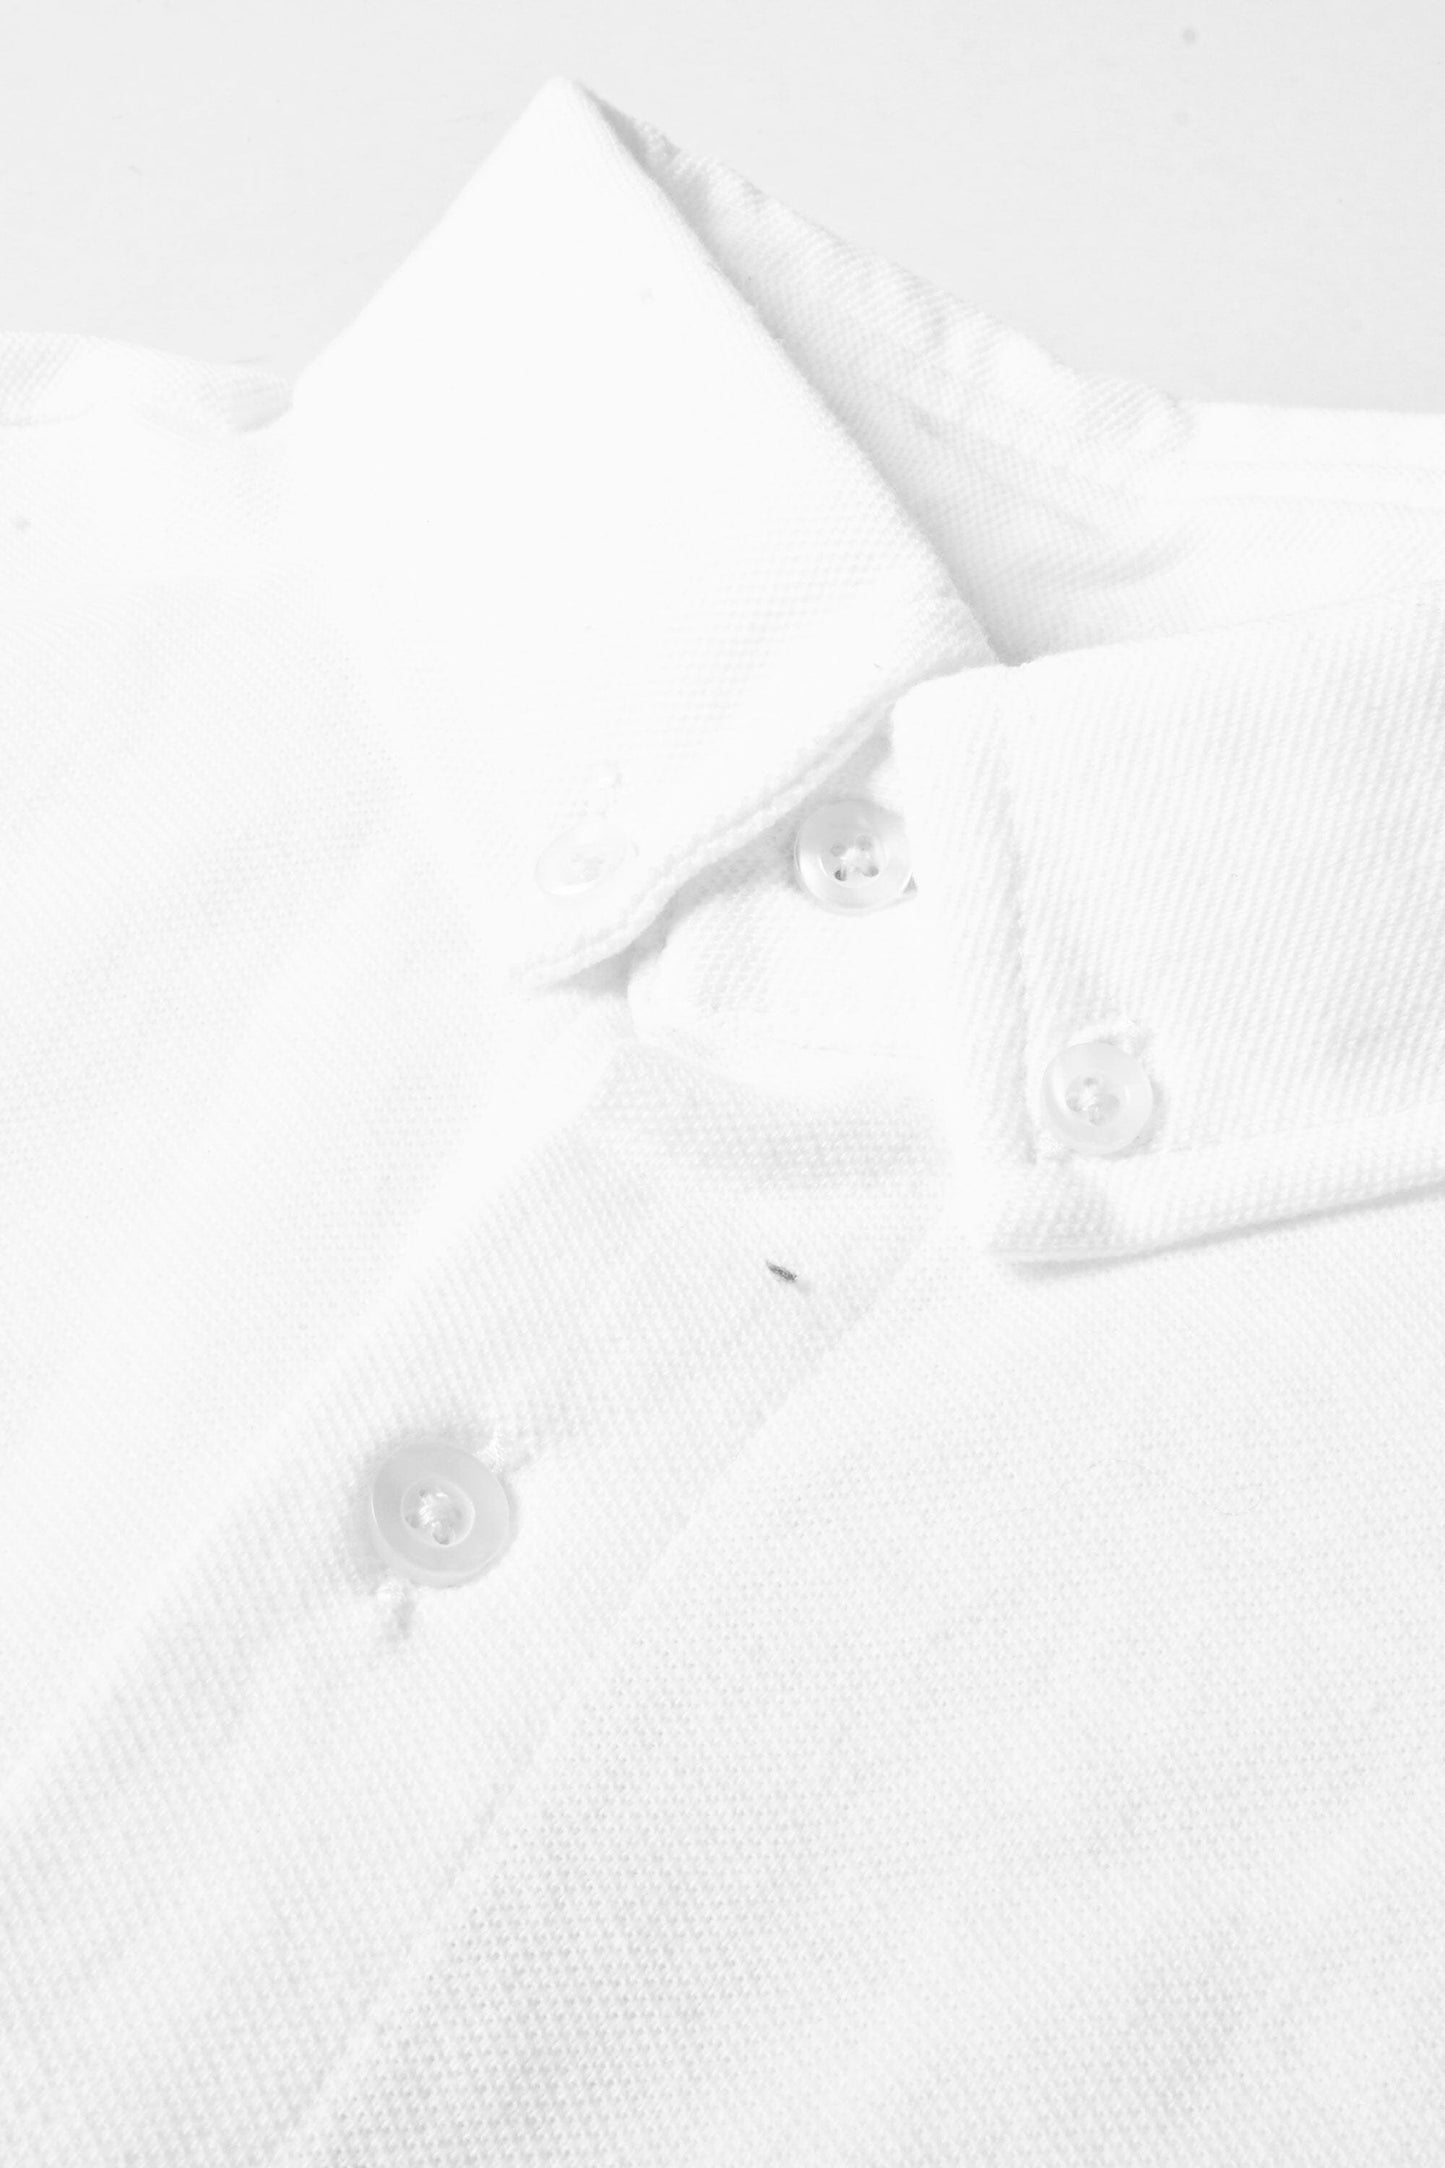 Polo Republica Men's Crest Embroidered Pique Casual Shirt Men's Casual Shirt Polo Republica 